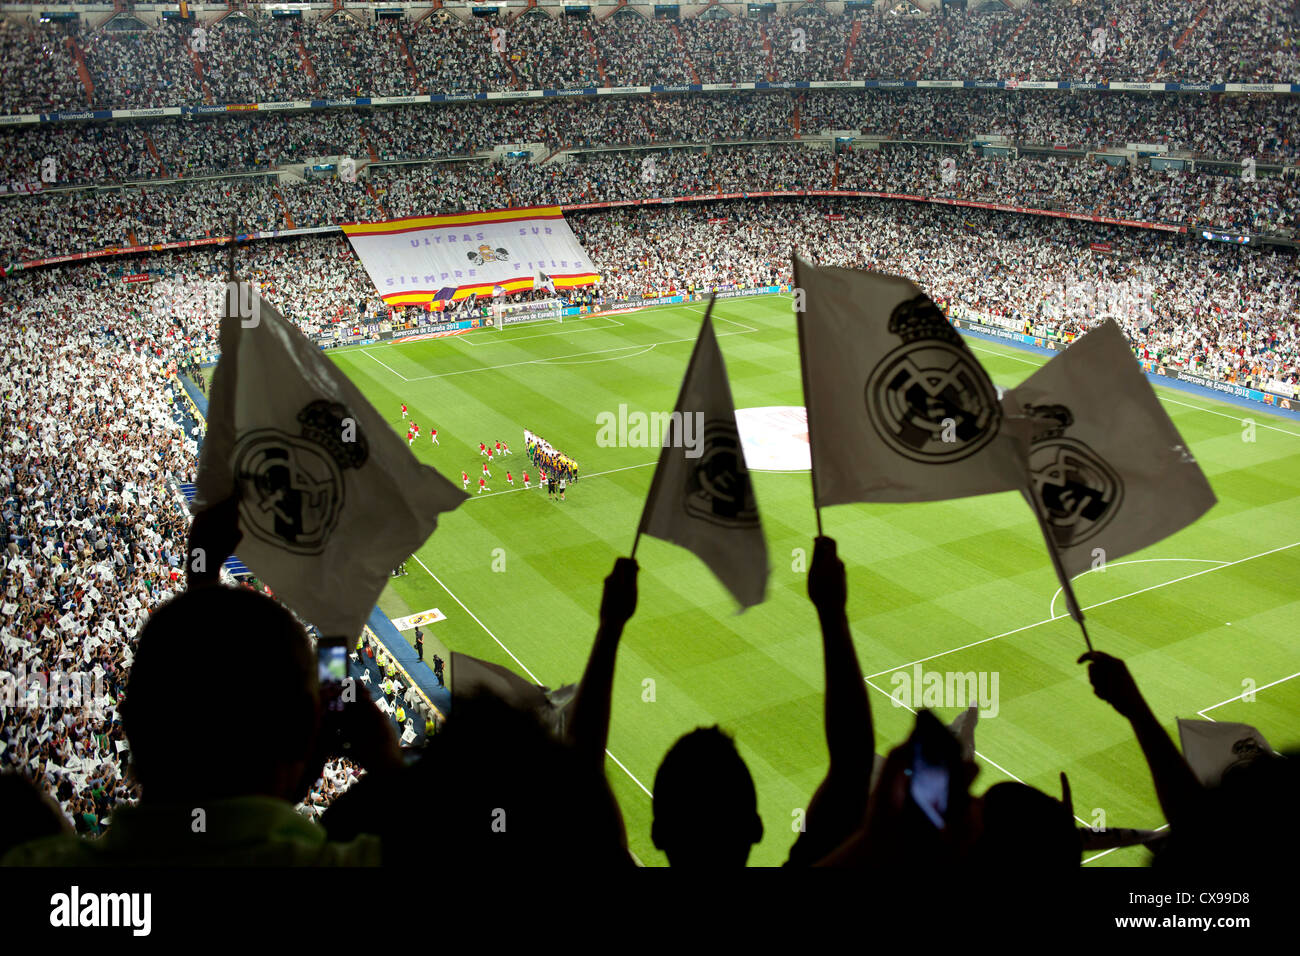 Eighty thousand people inside the Bernabeu stadium watching Real Madrid play Barcelona. Stock Photo